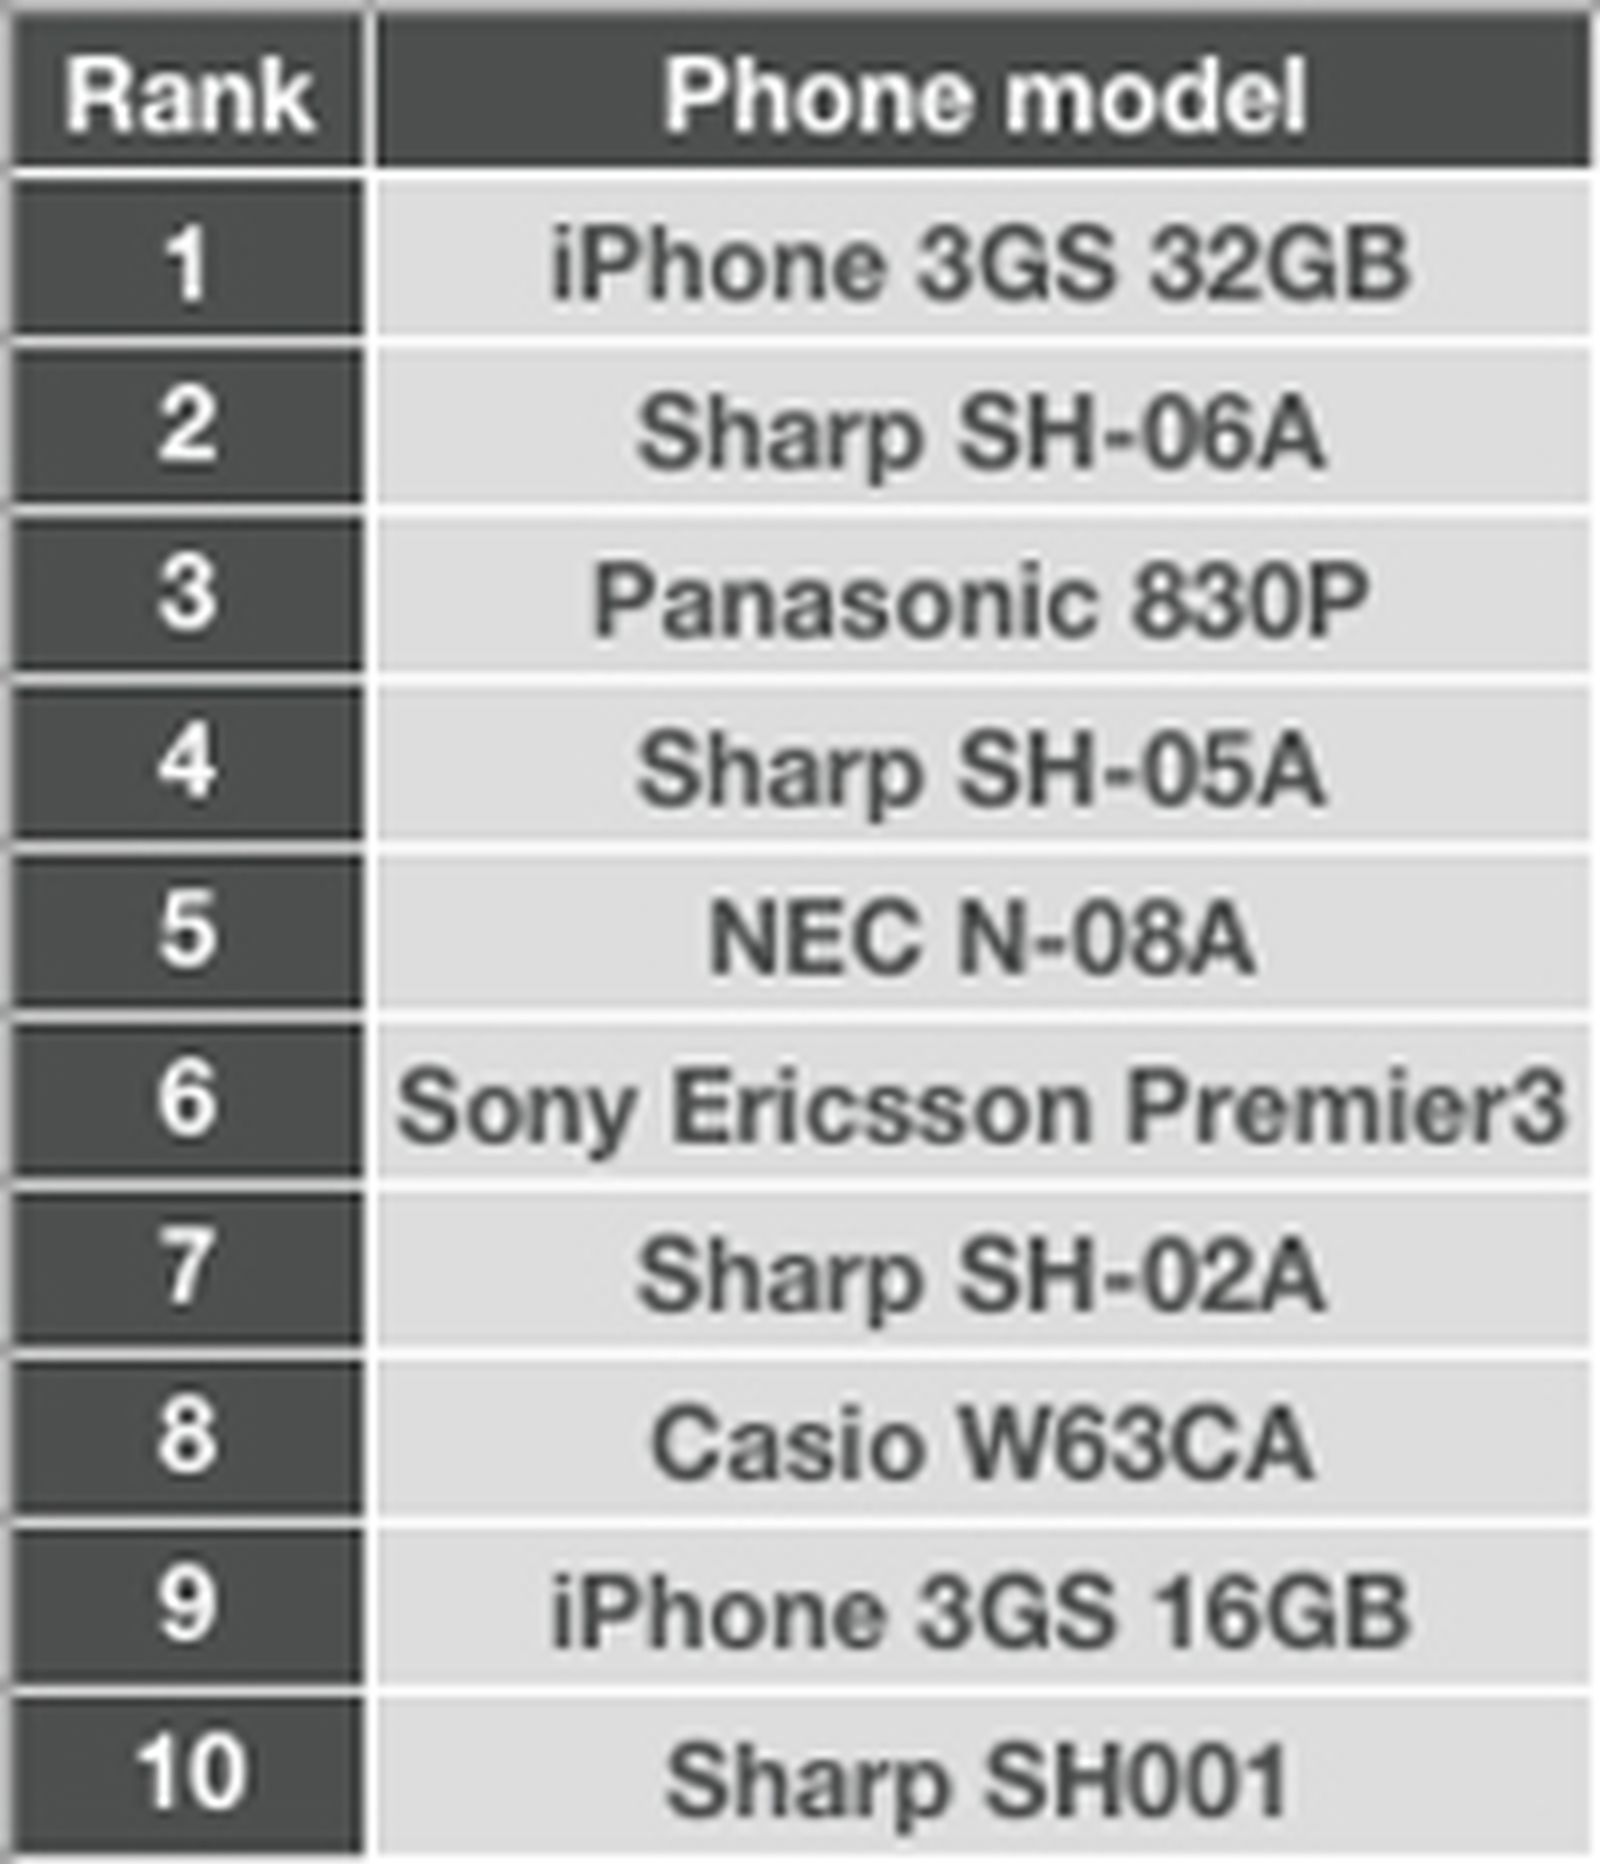 32 GB iPhone 3GS Ranks as Top Selling Mobile Phone in Japan in